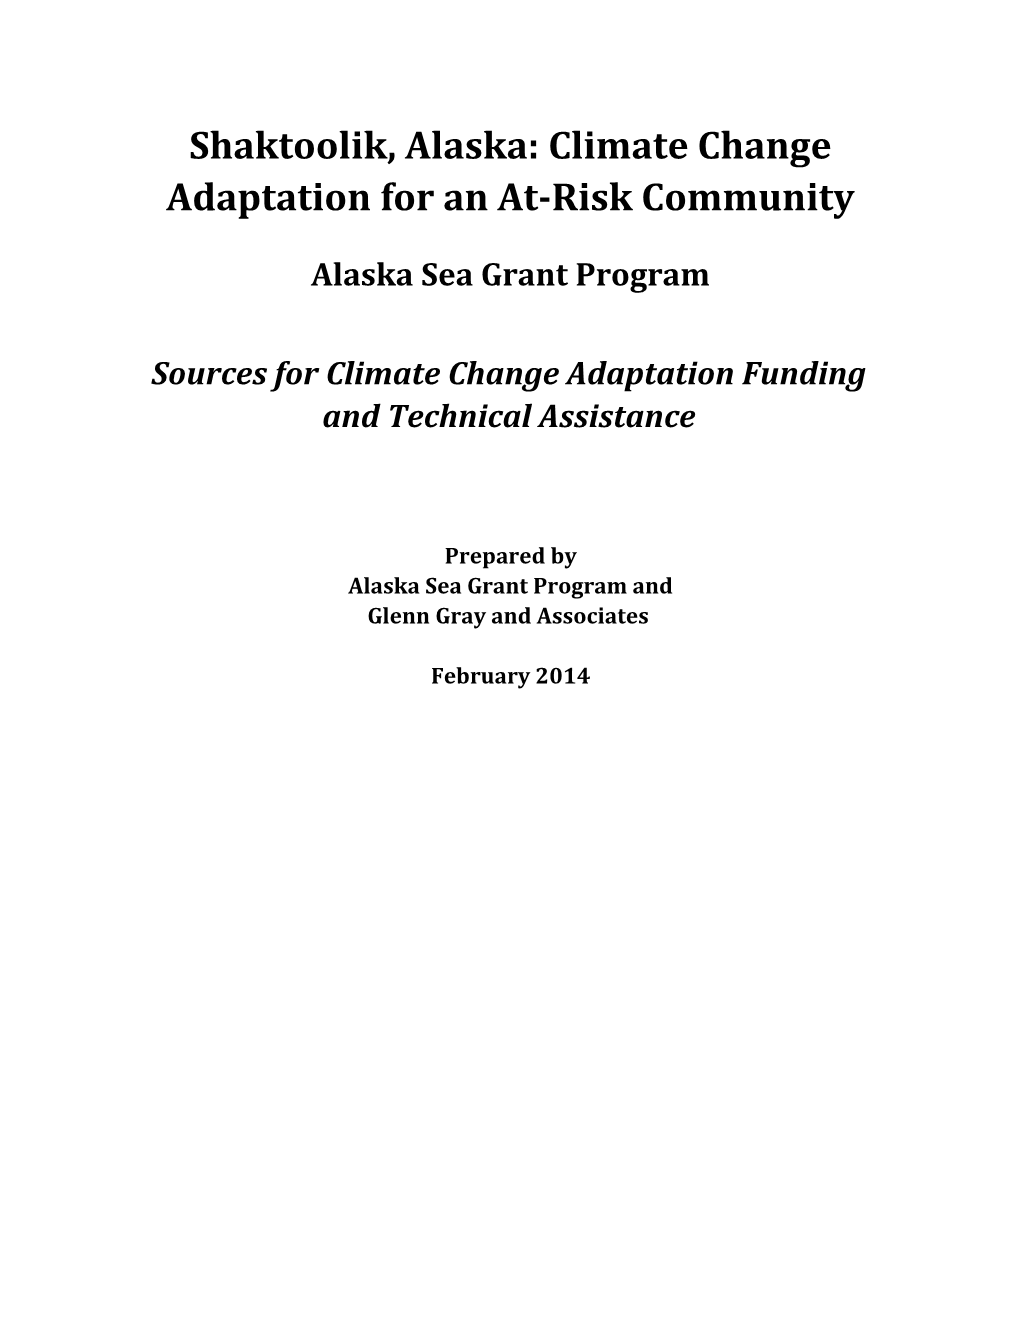 Shaktoolik, Alaska: Climate Change Adaptation for an At-Risk Community